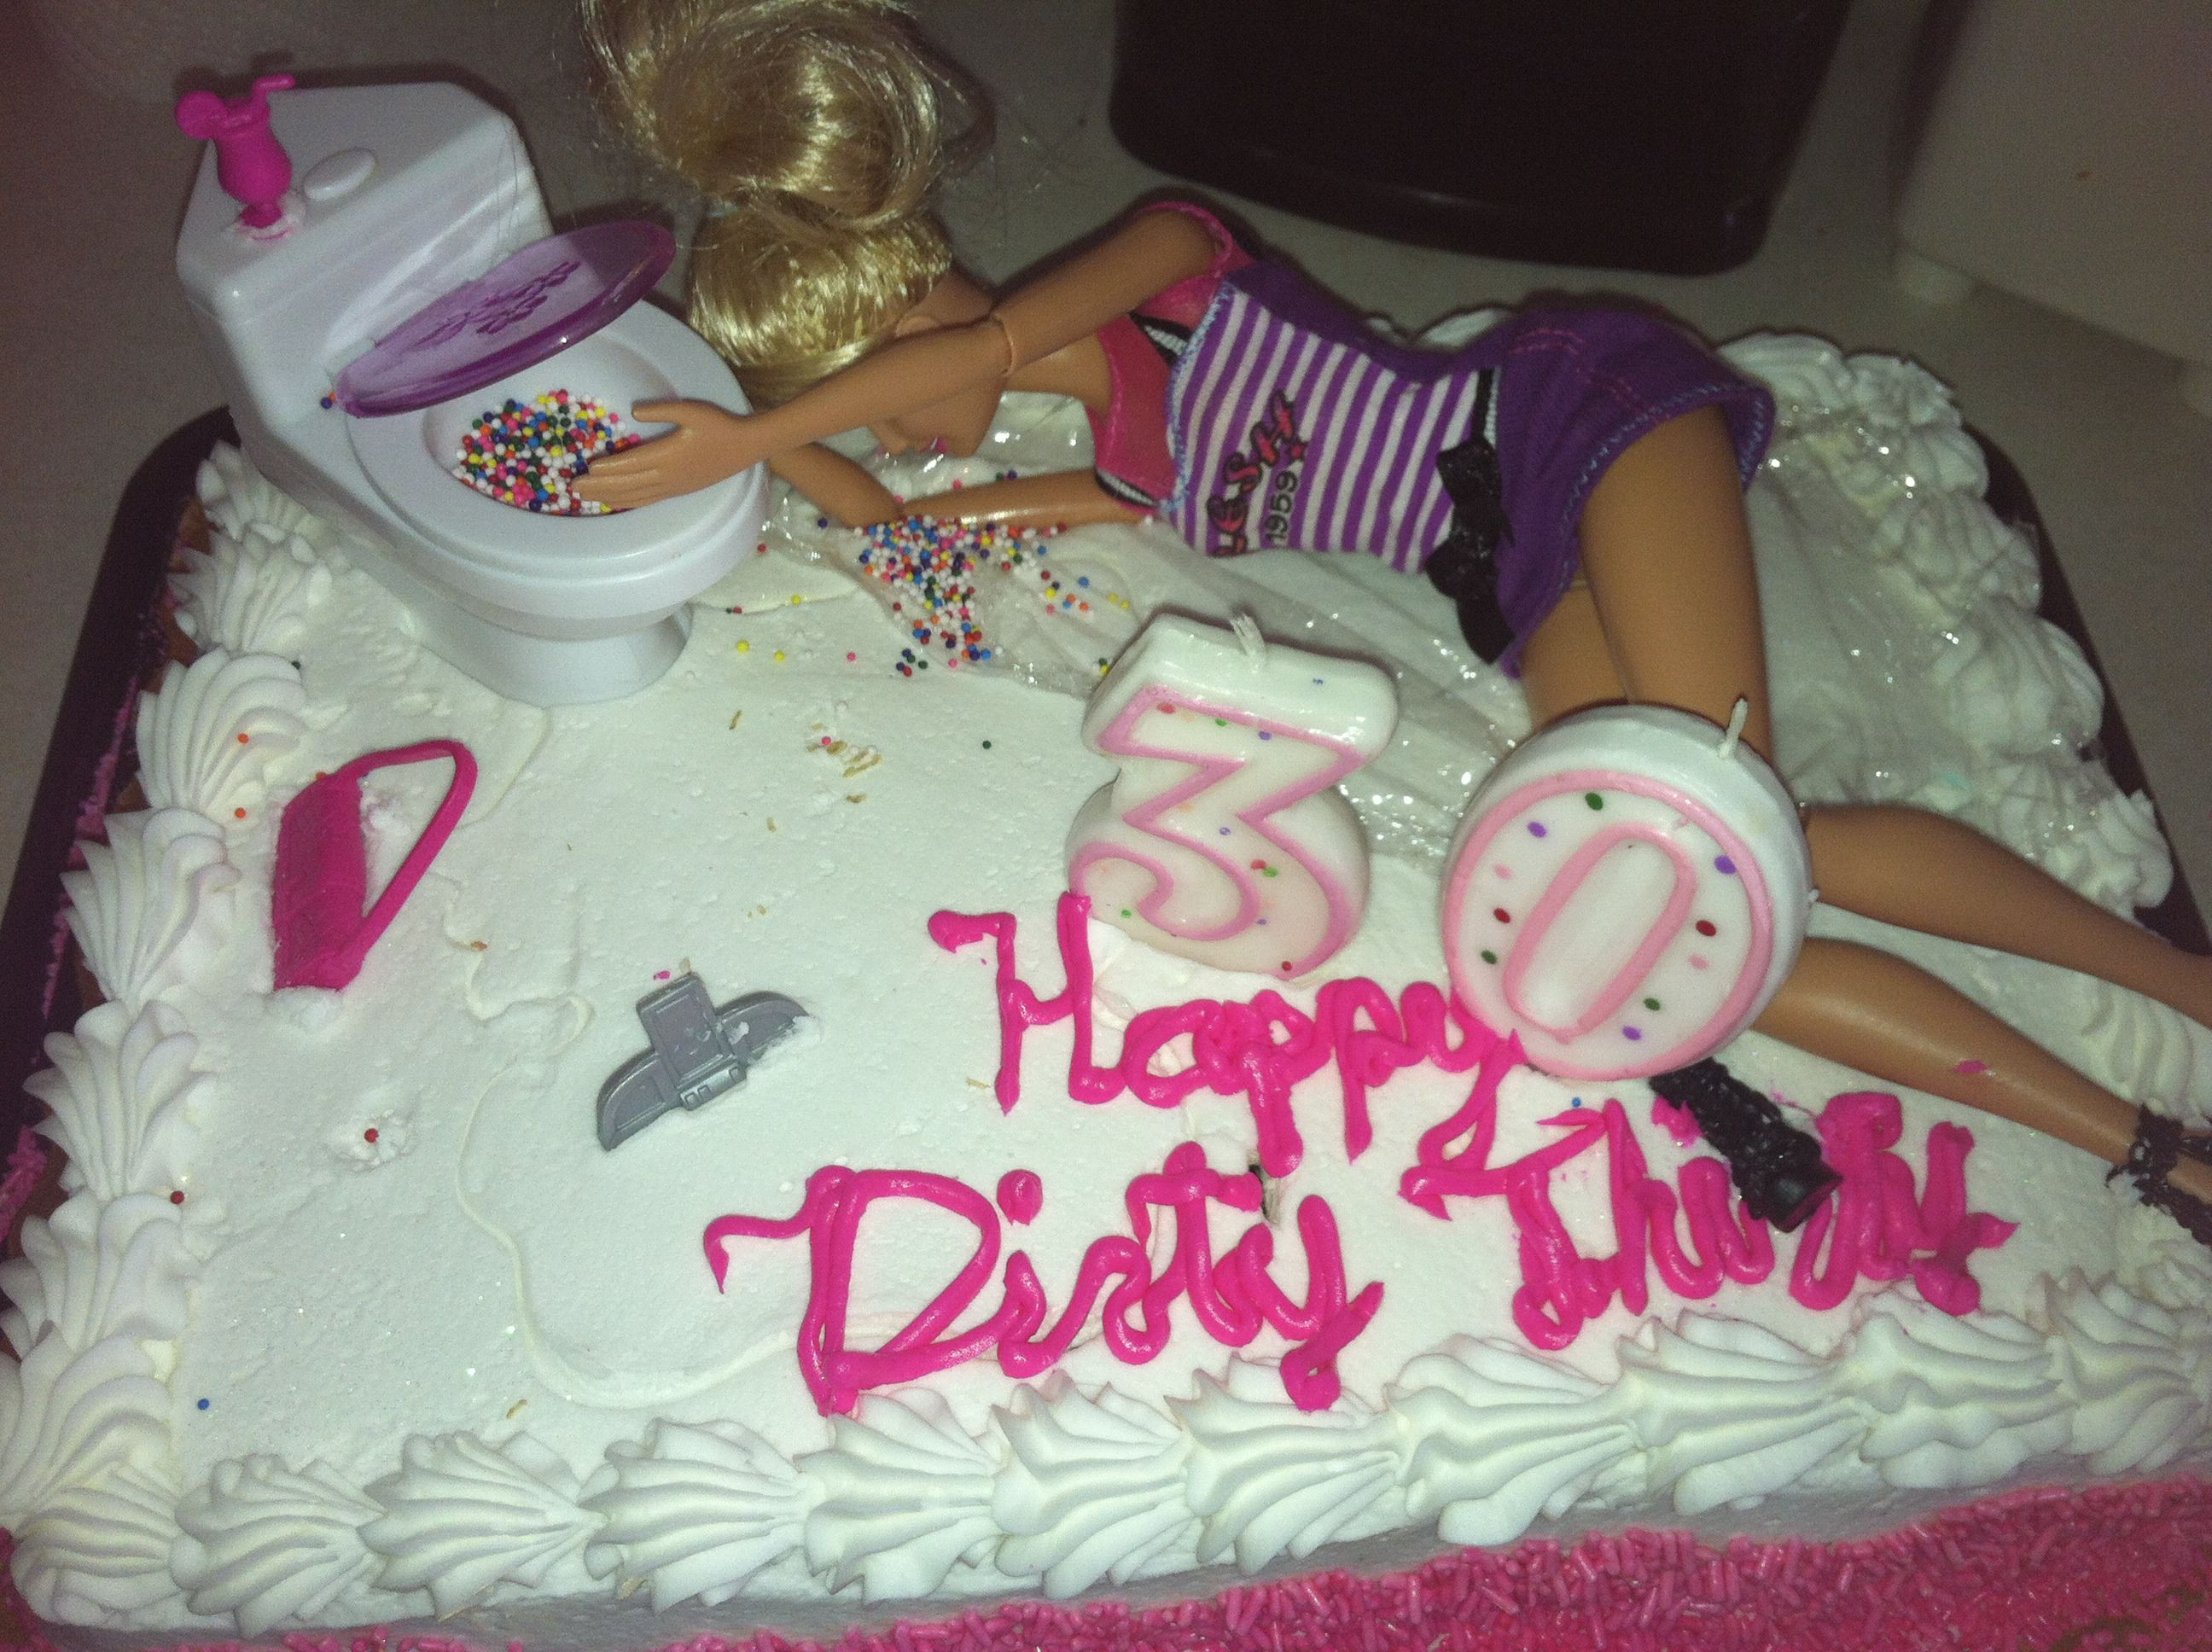 Dirty 30 Birthday Cakes 30th Birthday Cake Dirty 30 Fun Crafts Things To Make